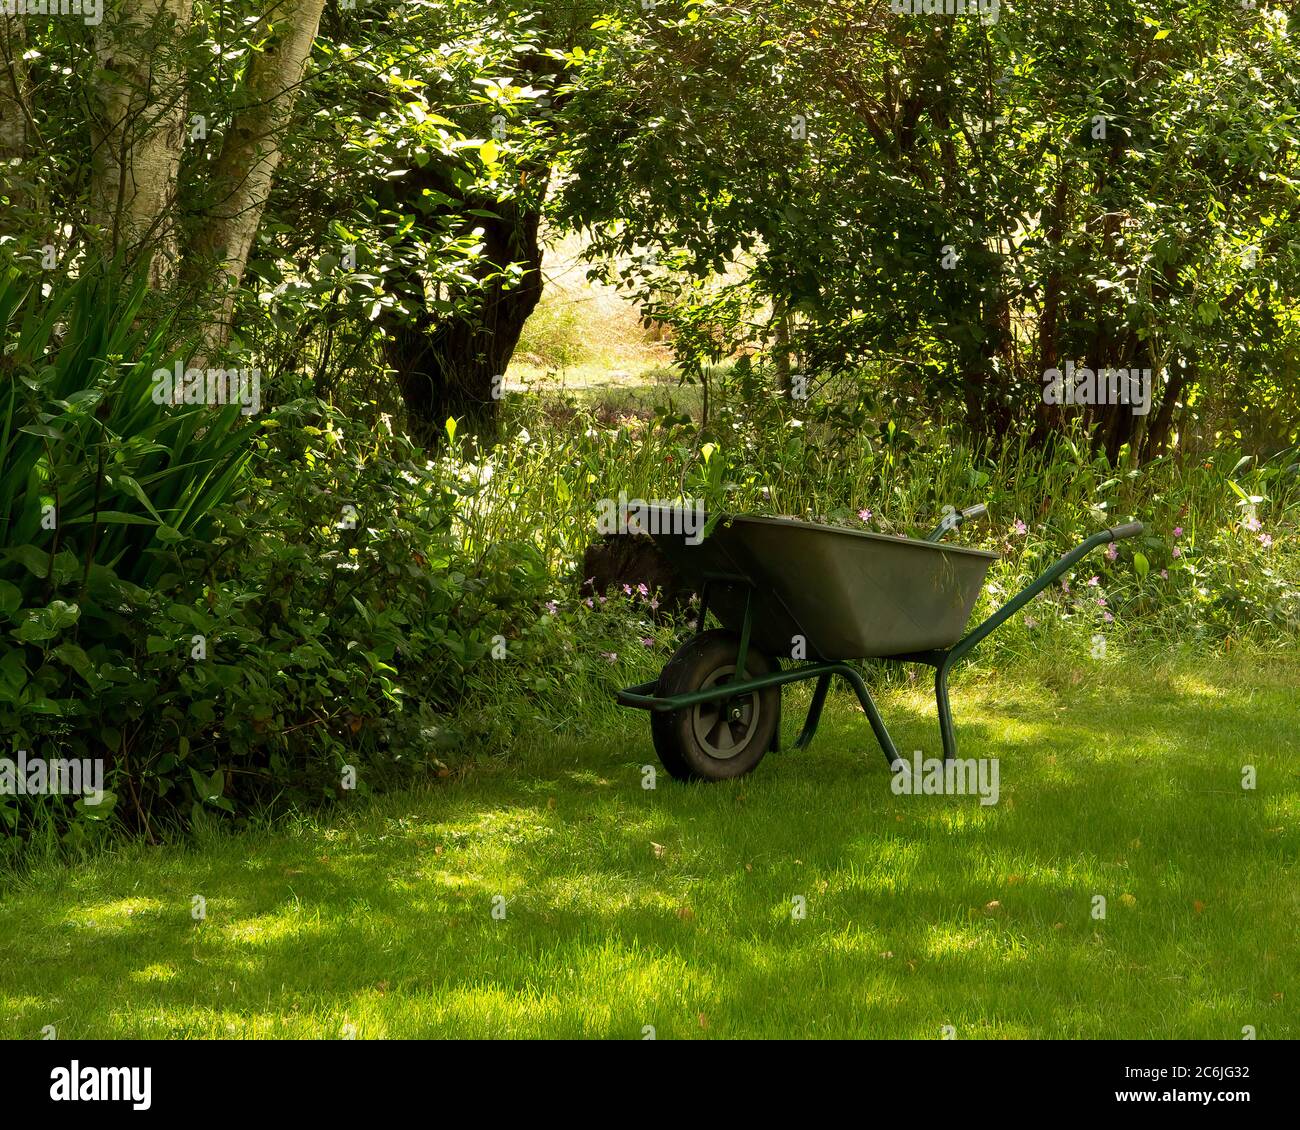 Wheelbarrow full of  weeds  in garden. No people. Concept of garden recreation and helping environment Stock Photo